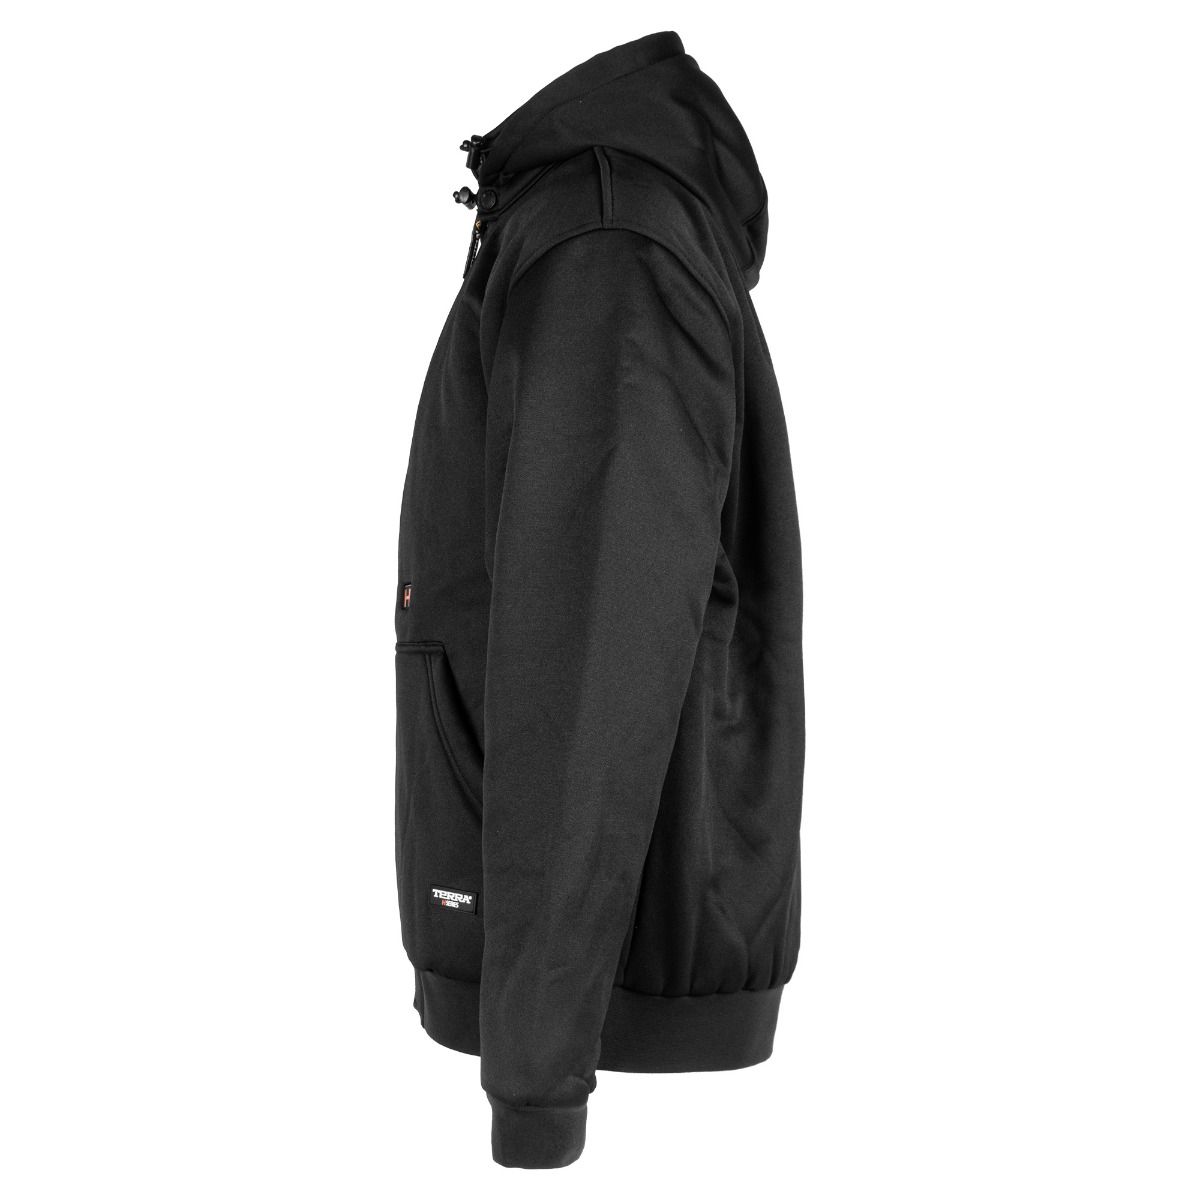 Terra Men's Black Heated Zip-Front Hoodie with Detachable Hood and Battery